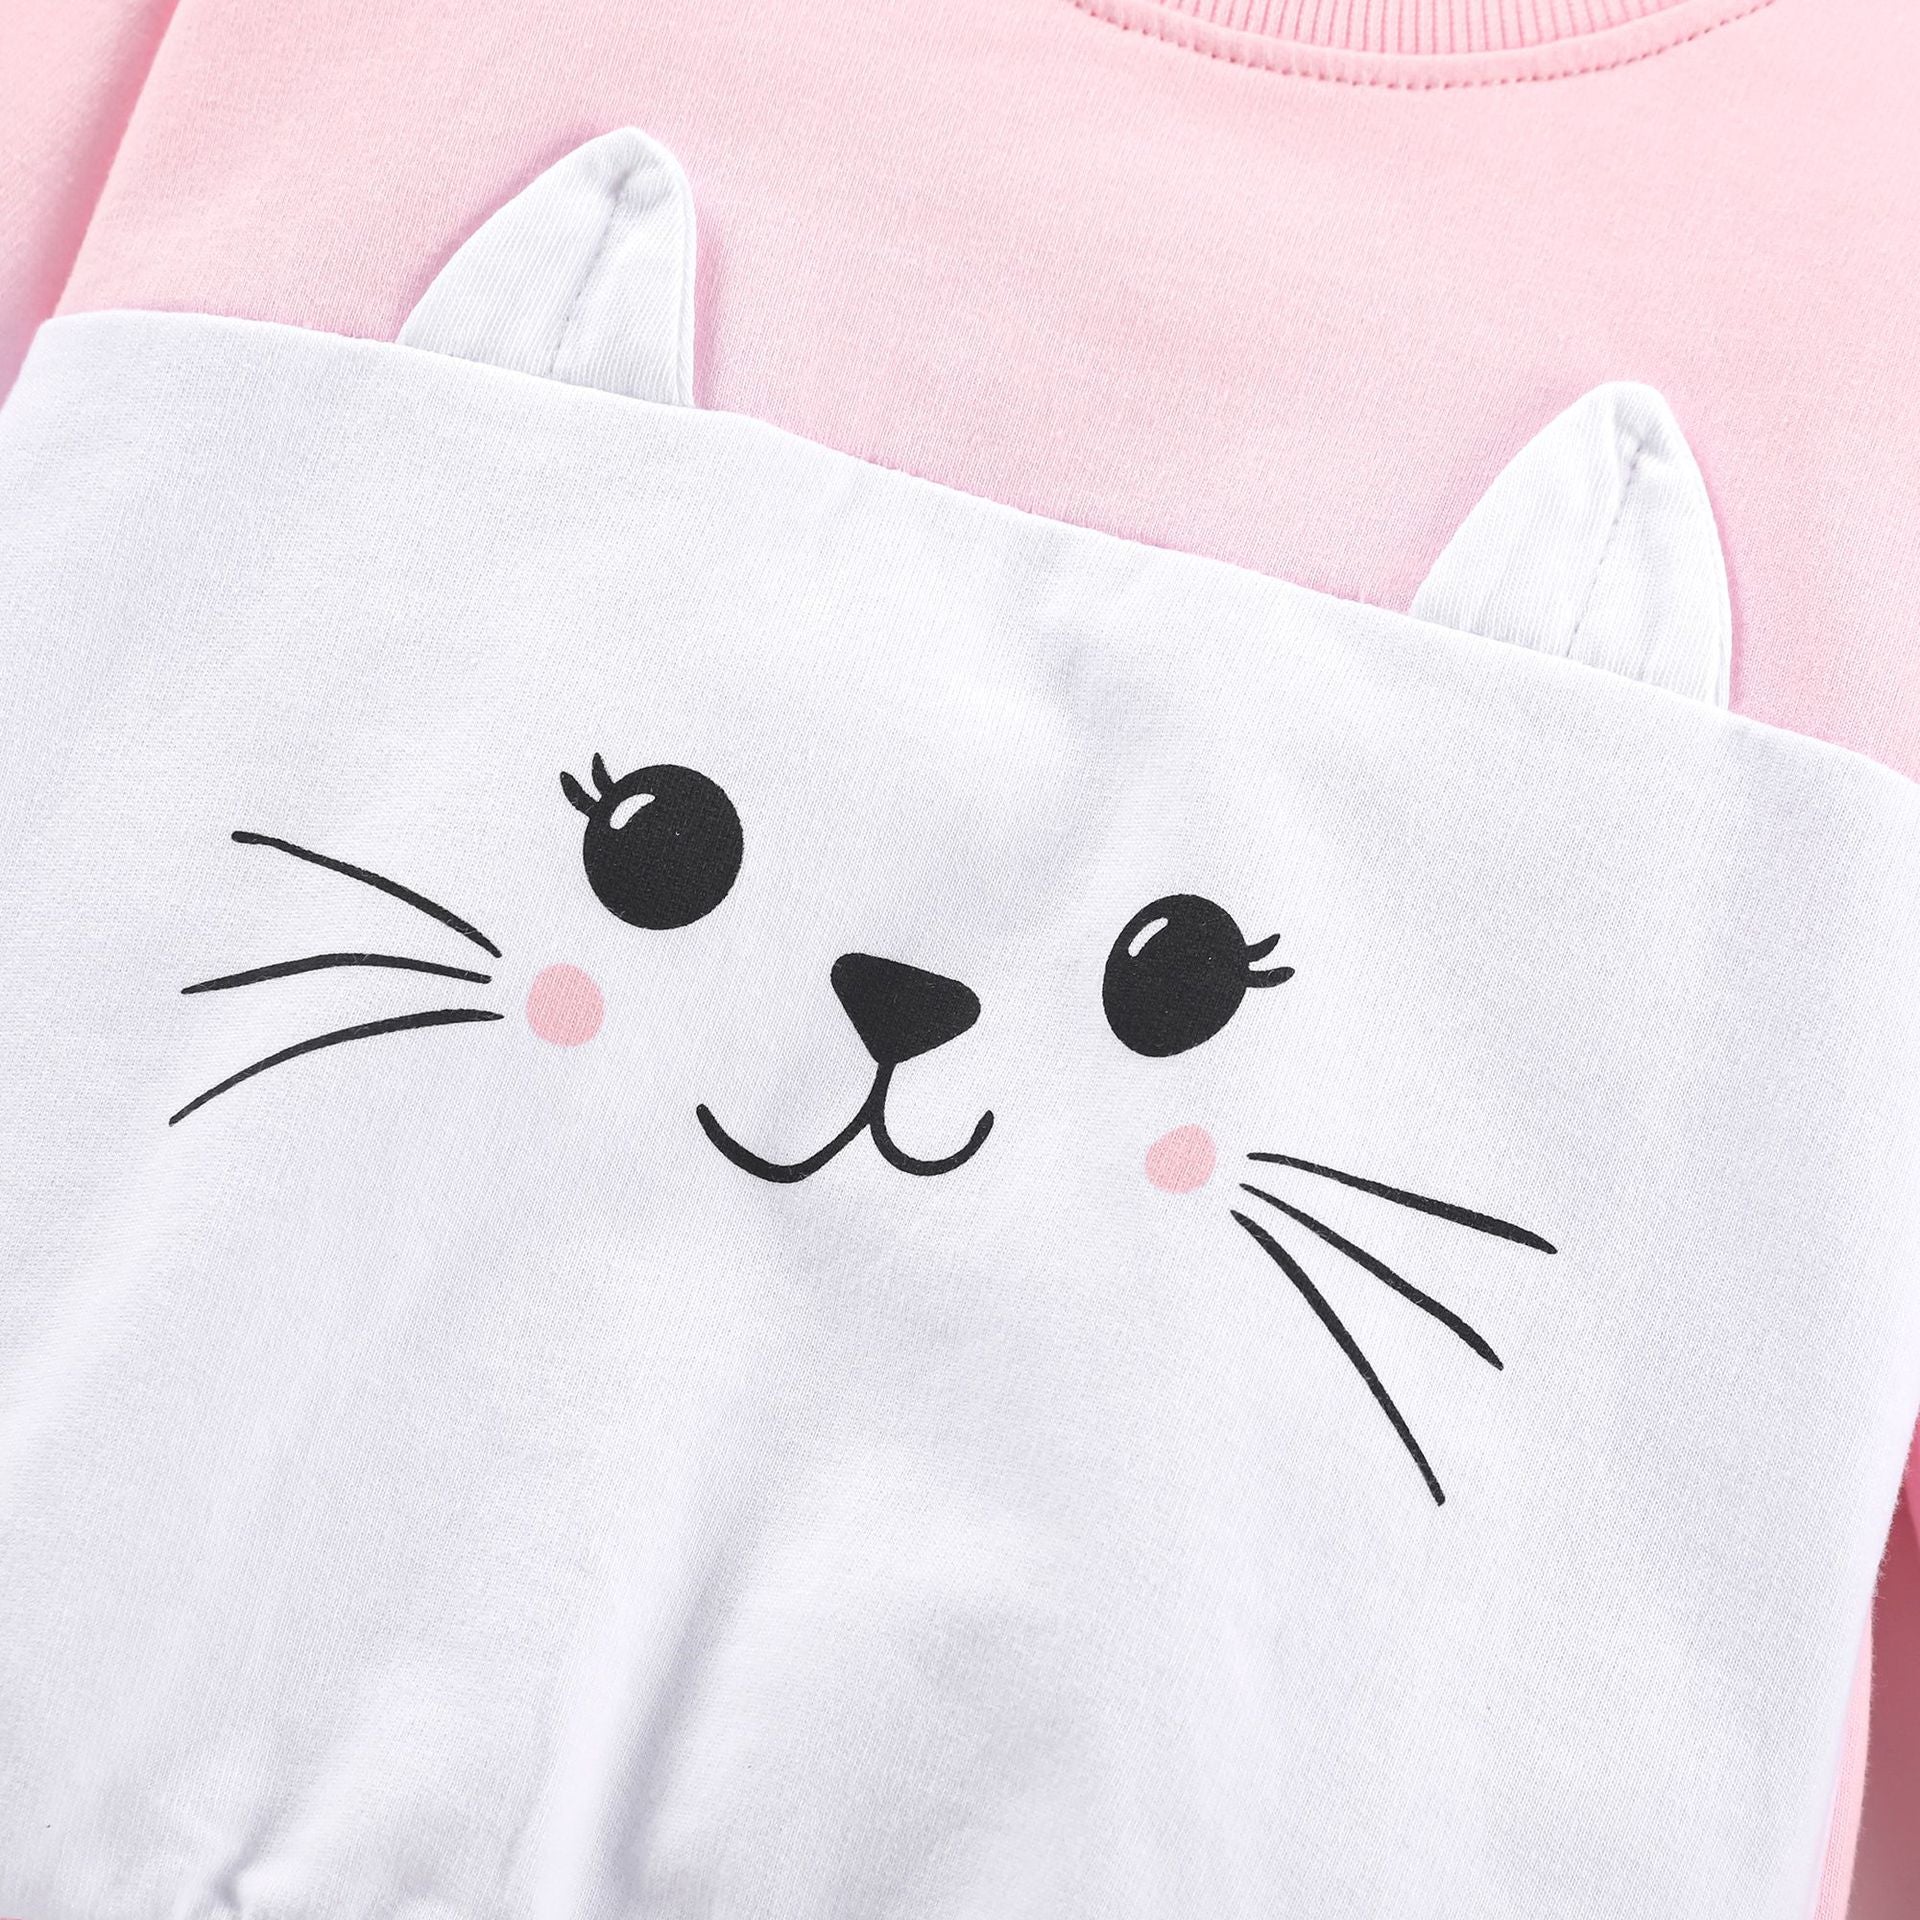 Baby Girl Cartoon Cat Graphic Hoodie Combo Polka Dot Pattern Pant Sets My Kids-USA